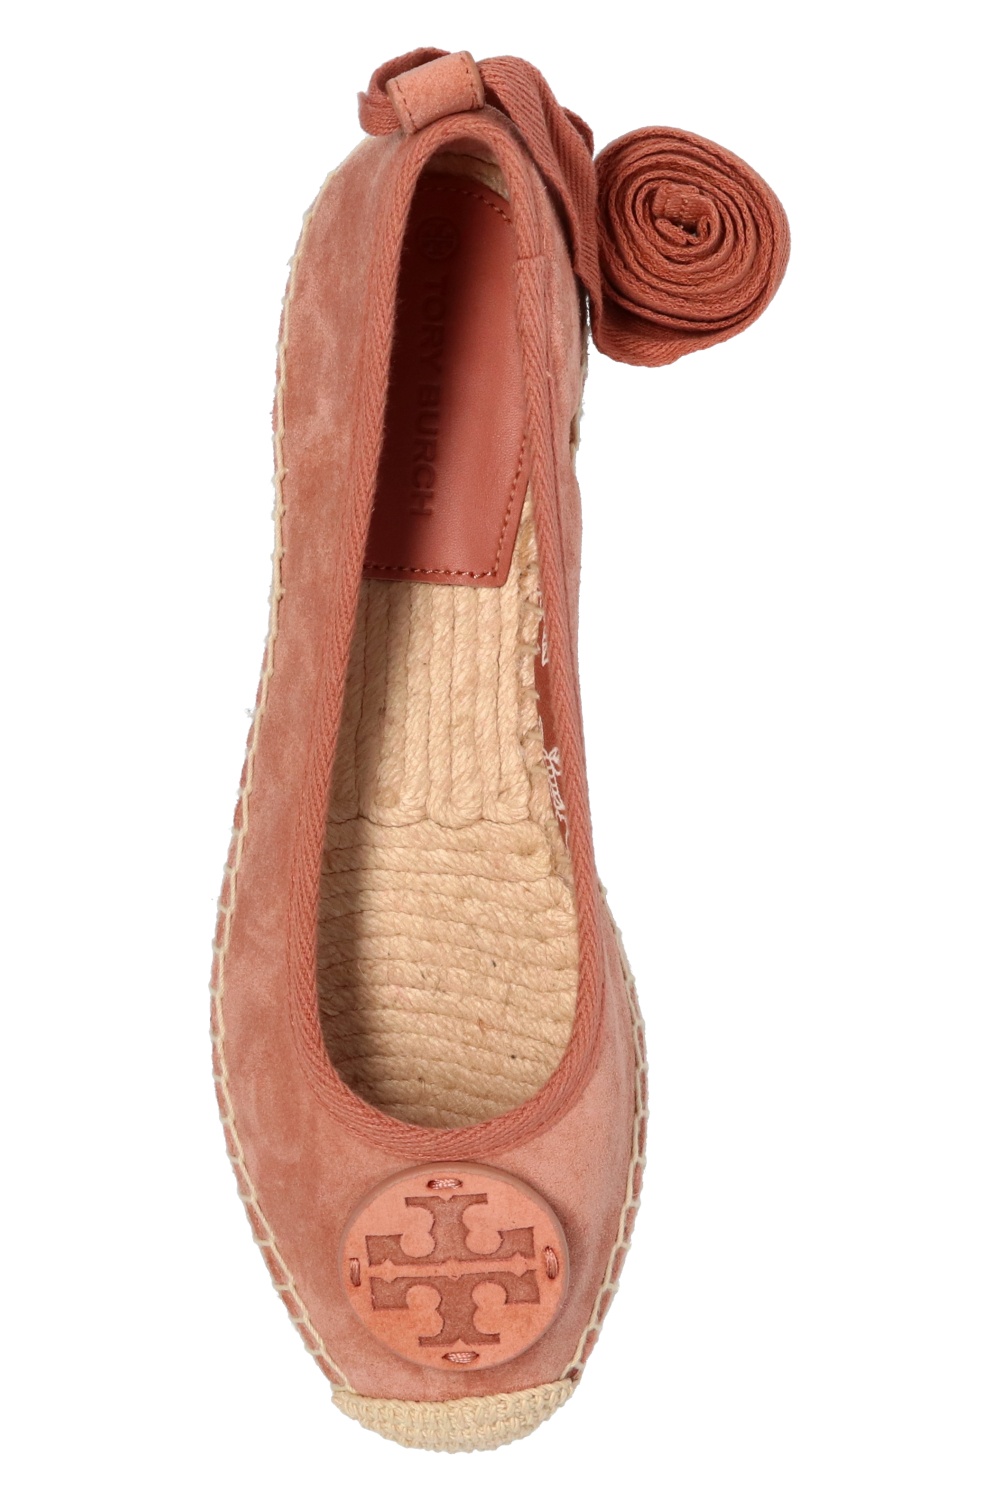 TORY BURCH, Salmon pink Women's Sandals